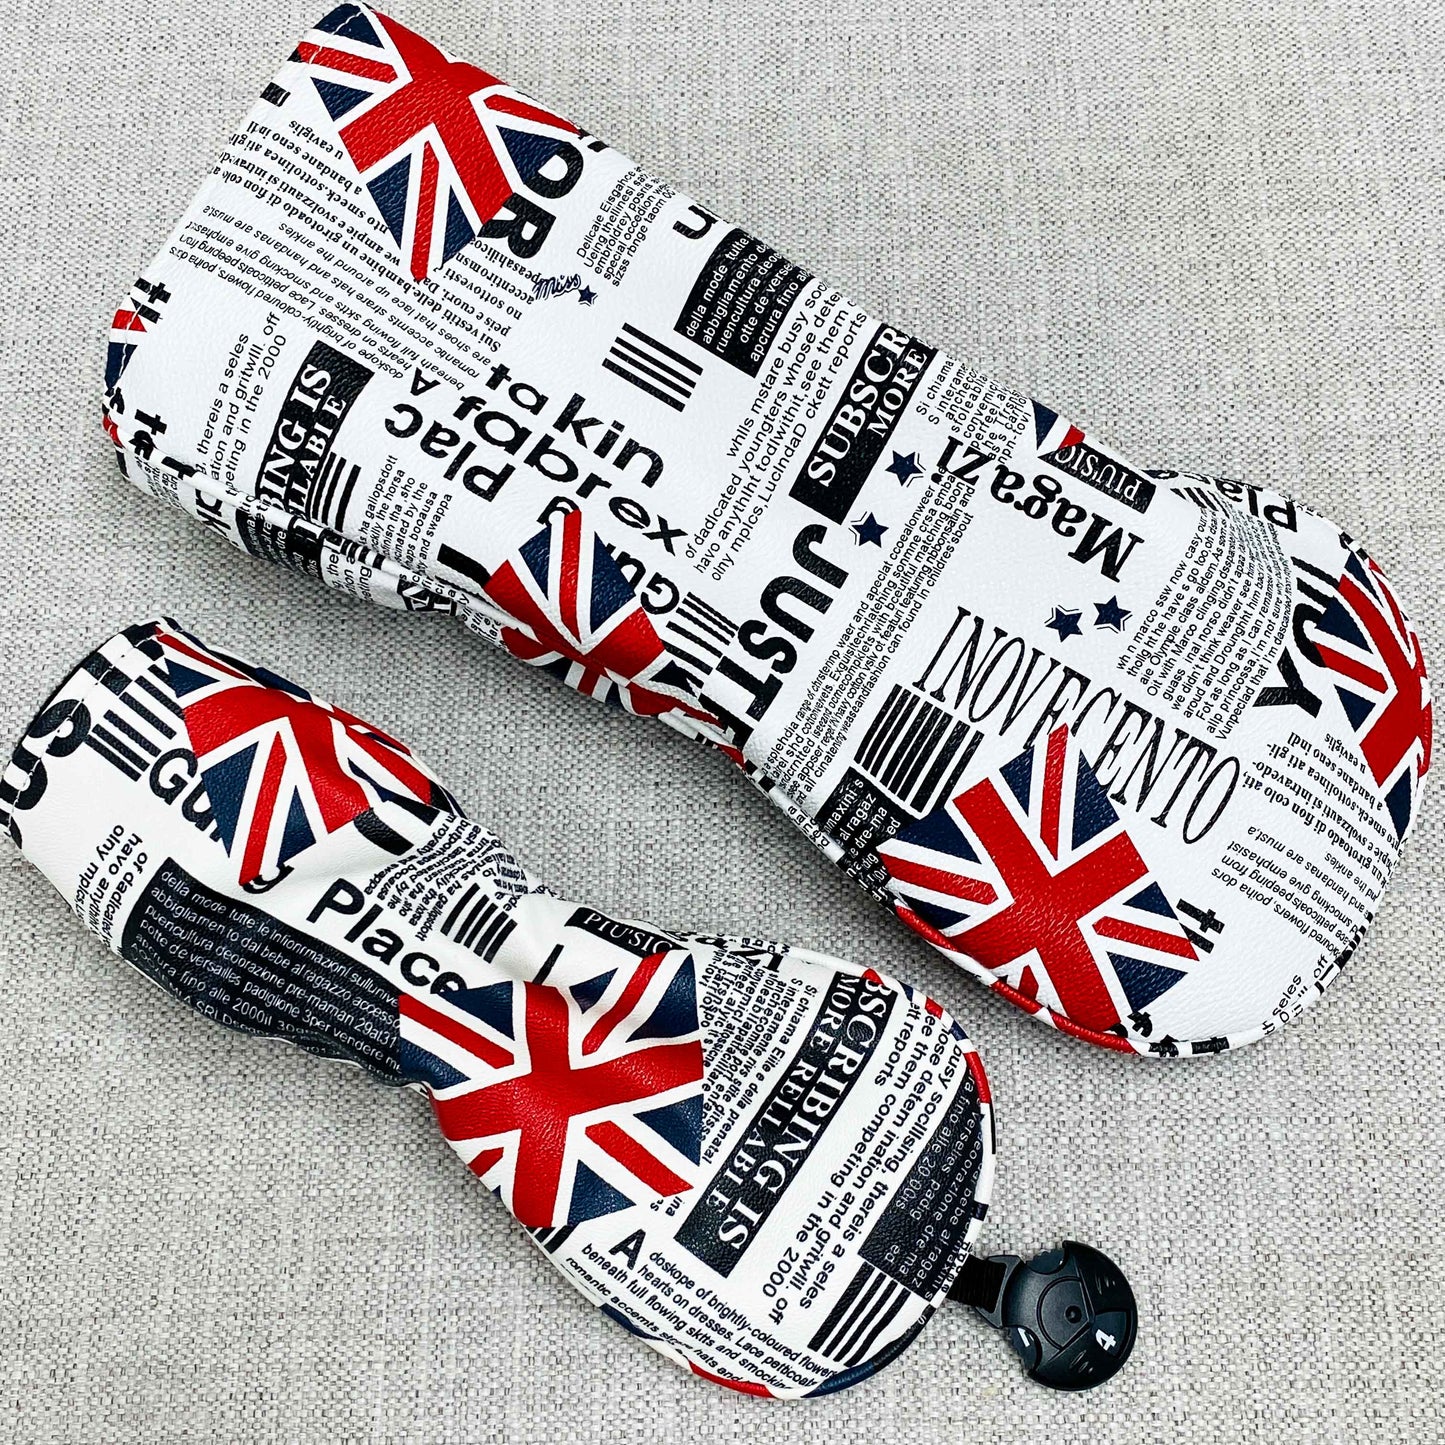 Union Jack headcover set (Driver + Fairway) - Excellent Condition